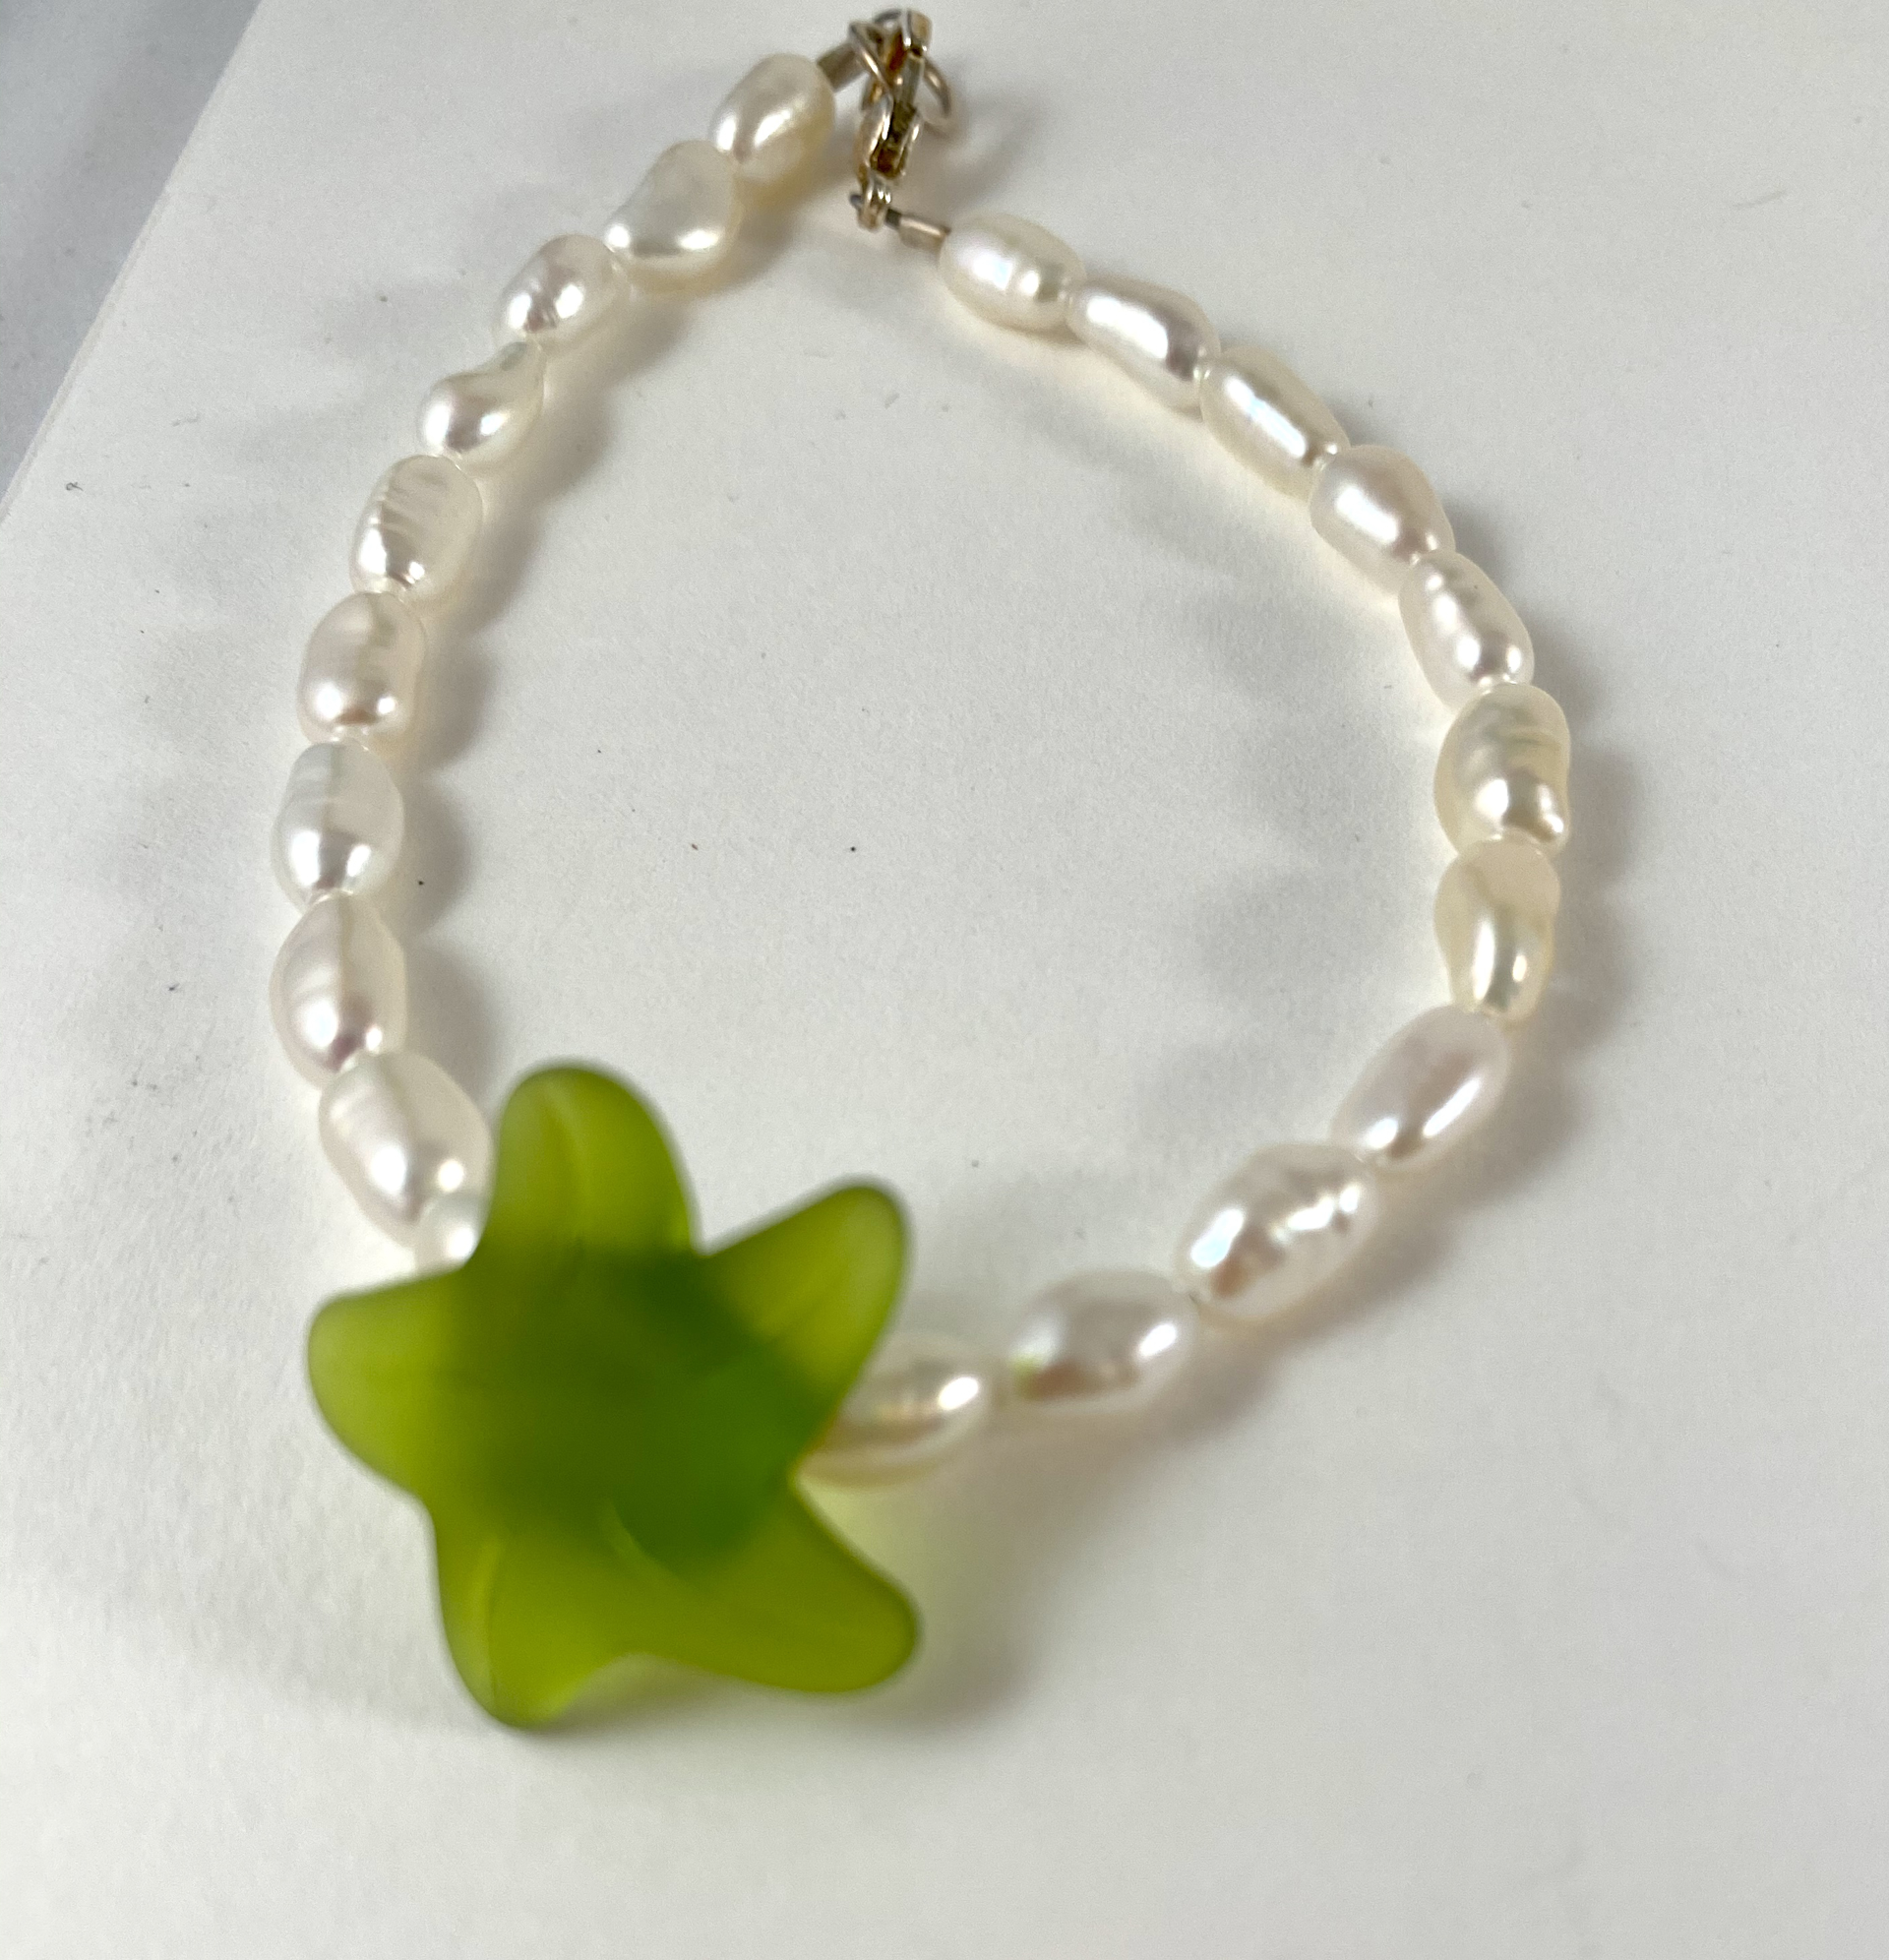 White Pearl Bracelet, green cultured seaglass charm P11 by Nance Trueworthy